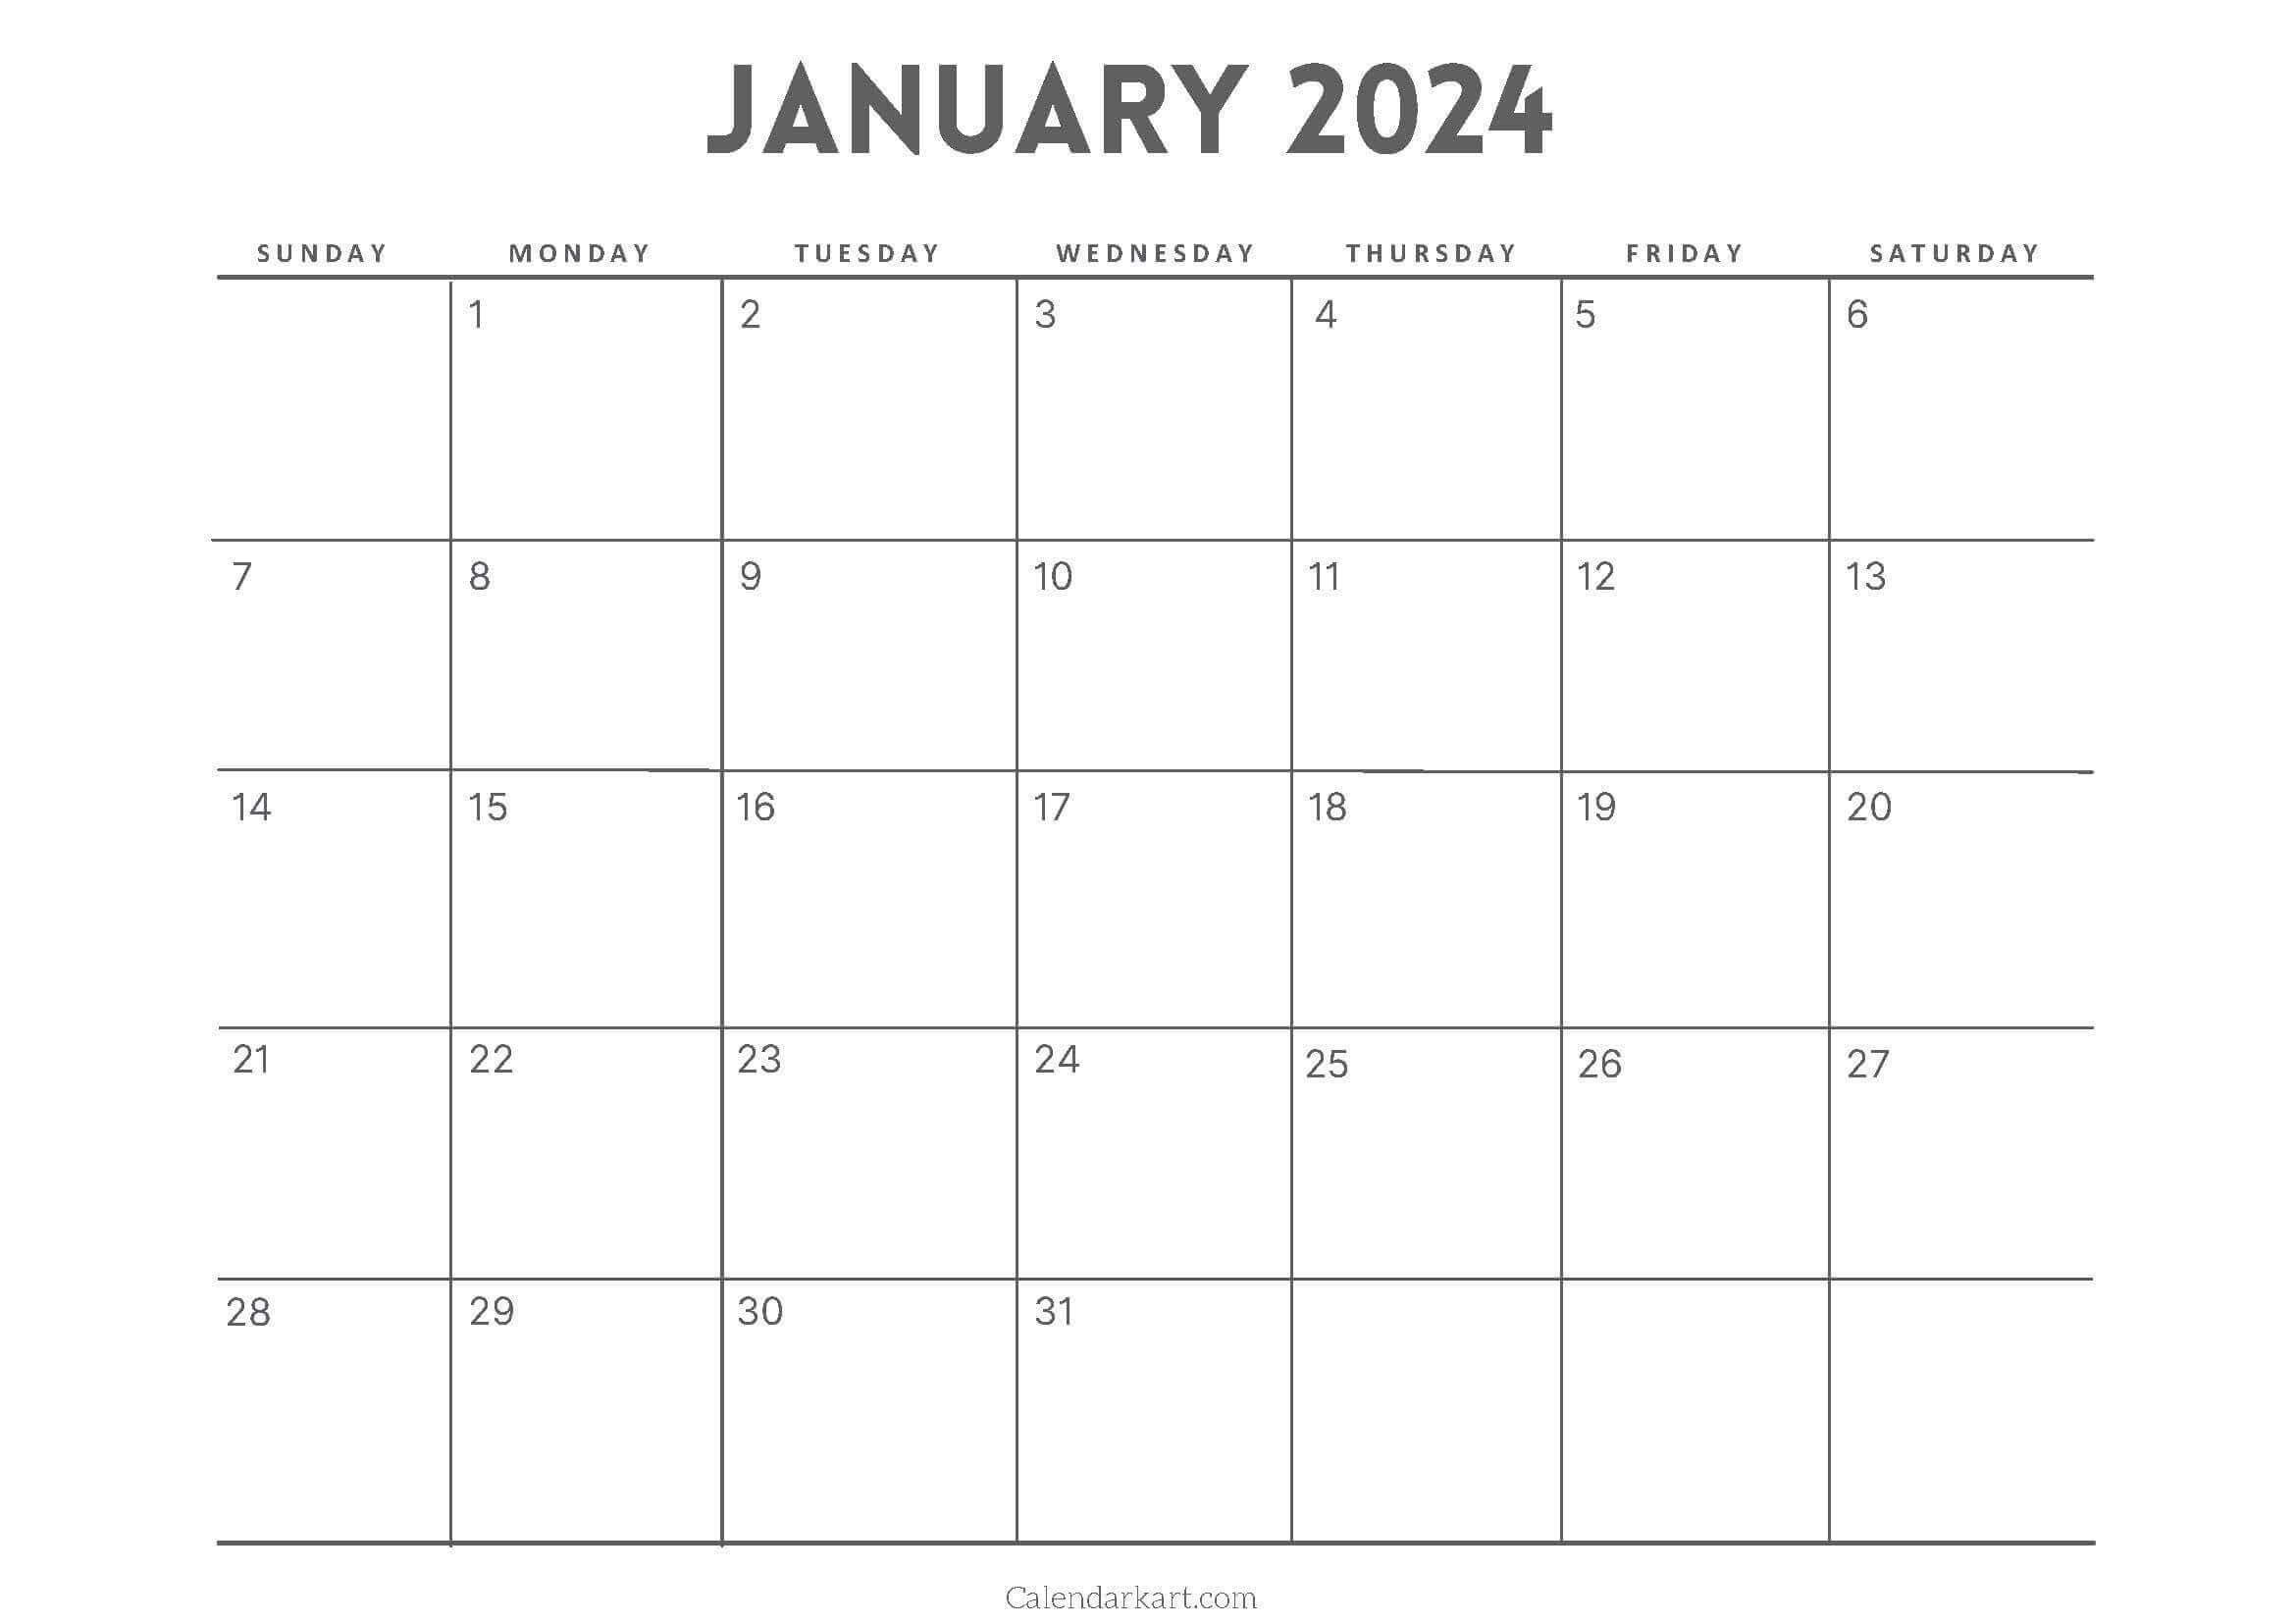 Free Printable January 2024 Calendars - Calendarkart |  Calendar 2024